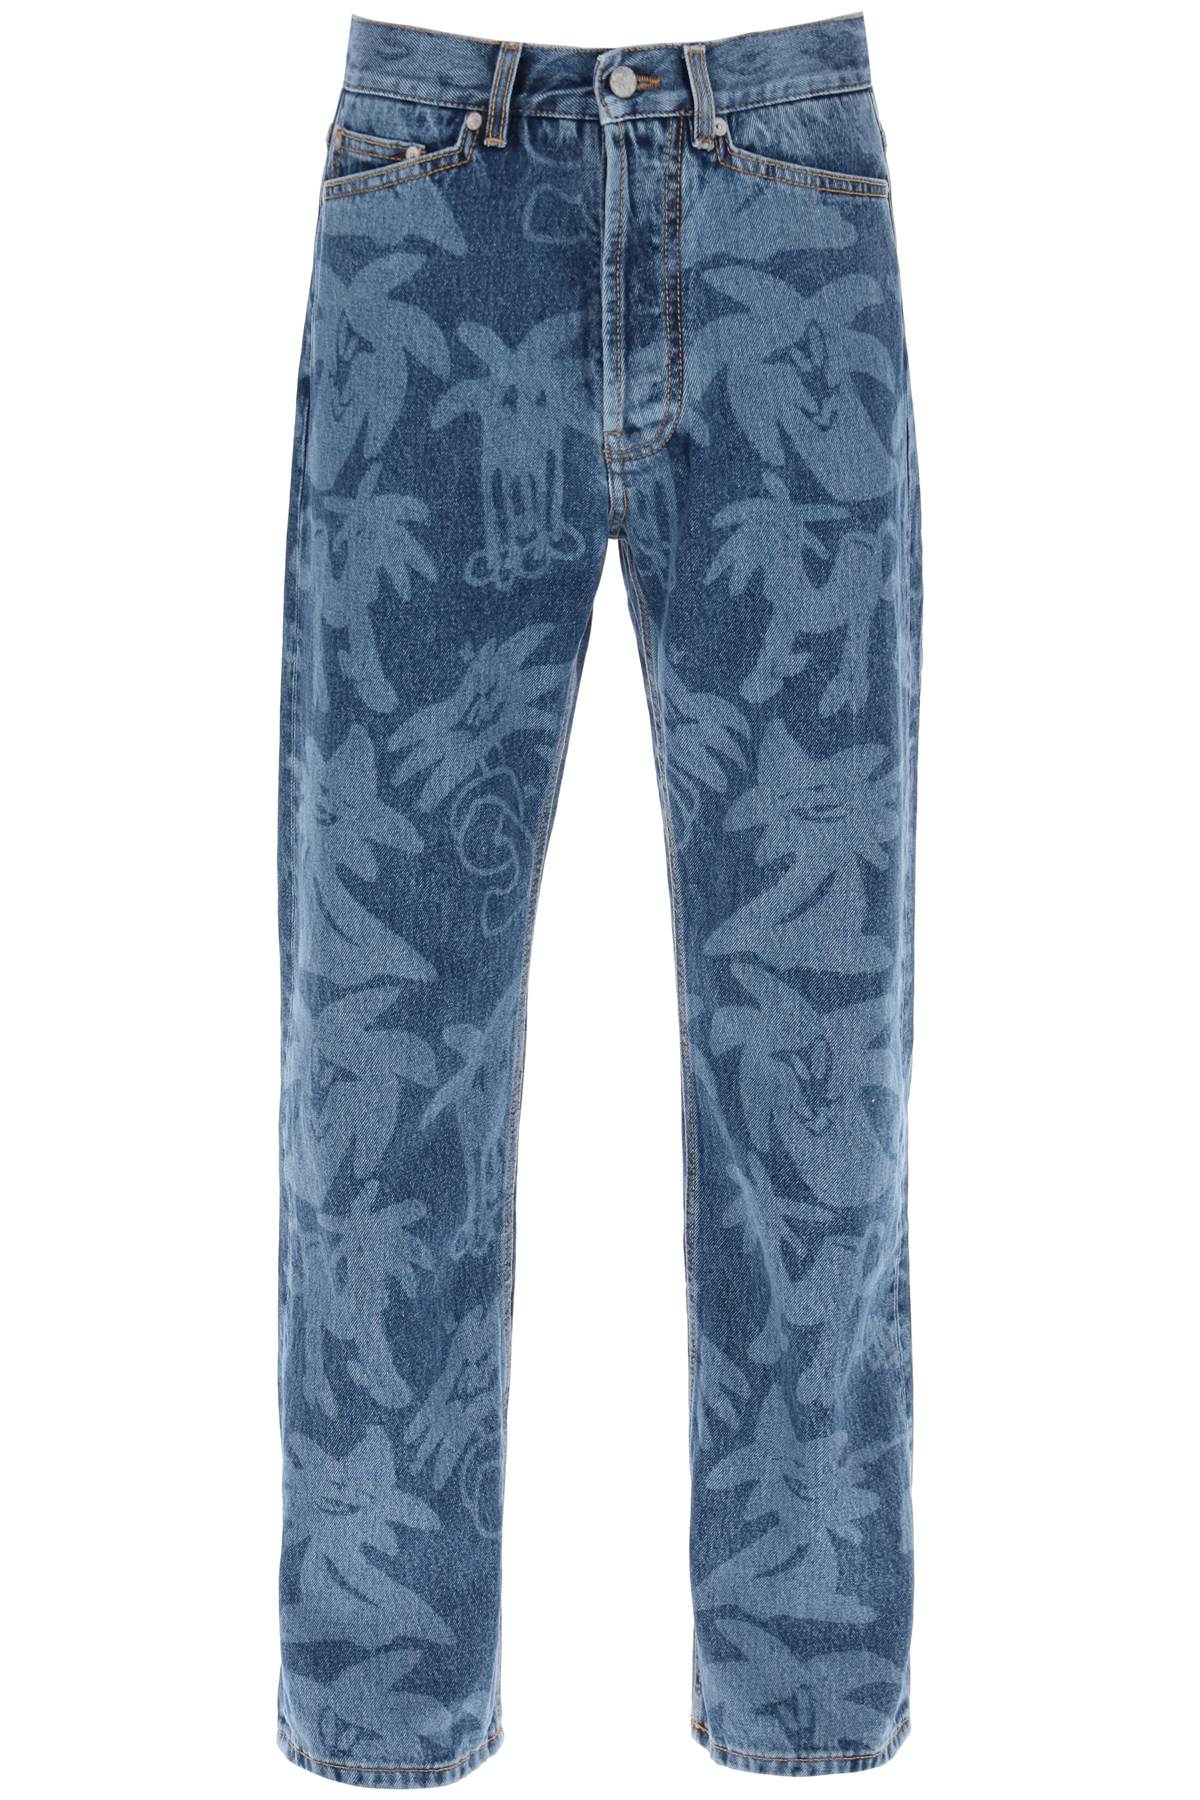 Palm Angels Palmity Allover Laser Denim Jeans In Denim Blue